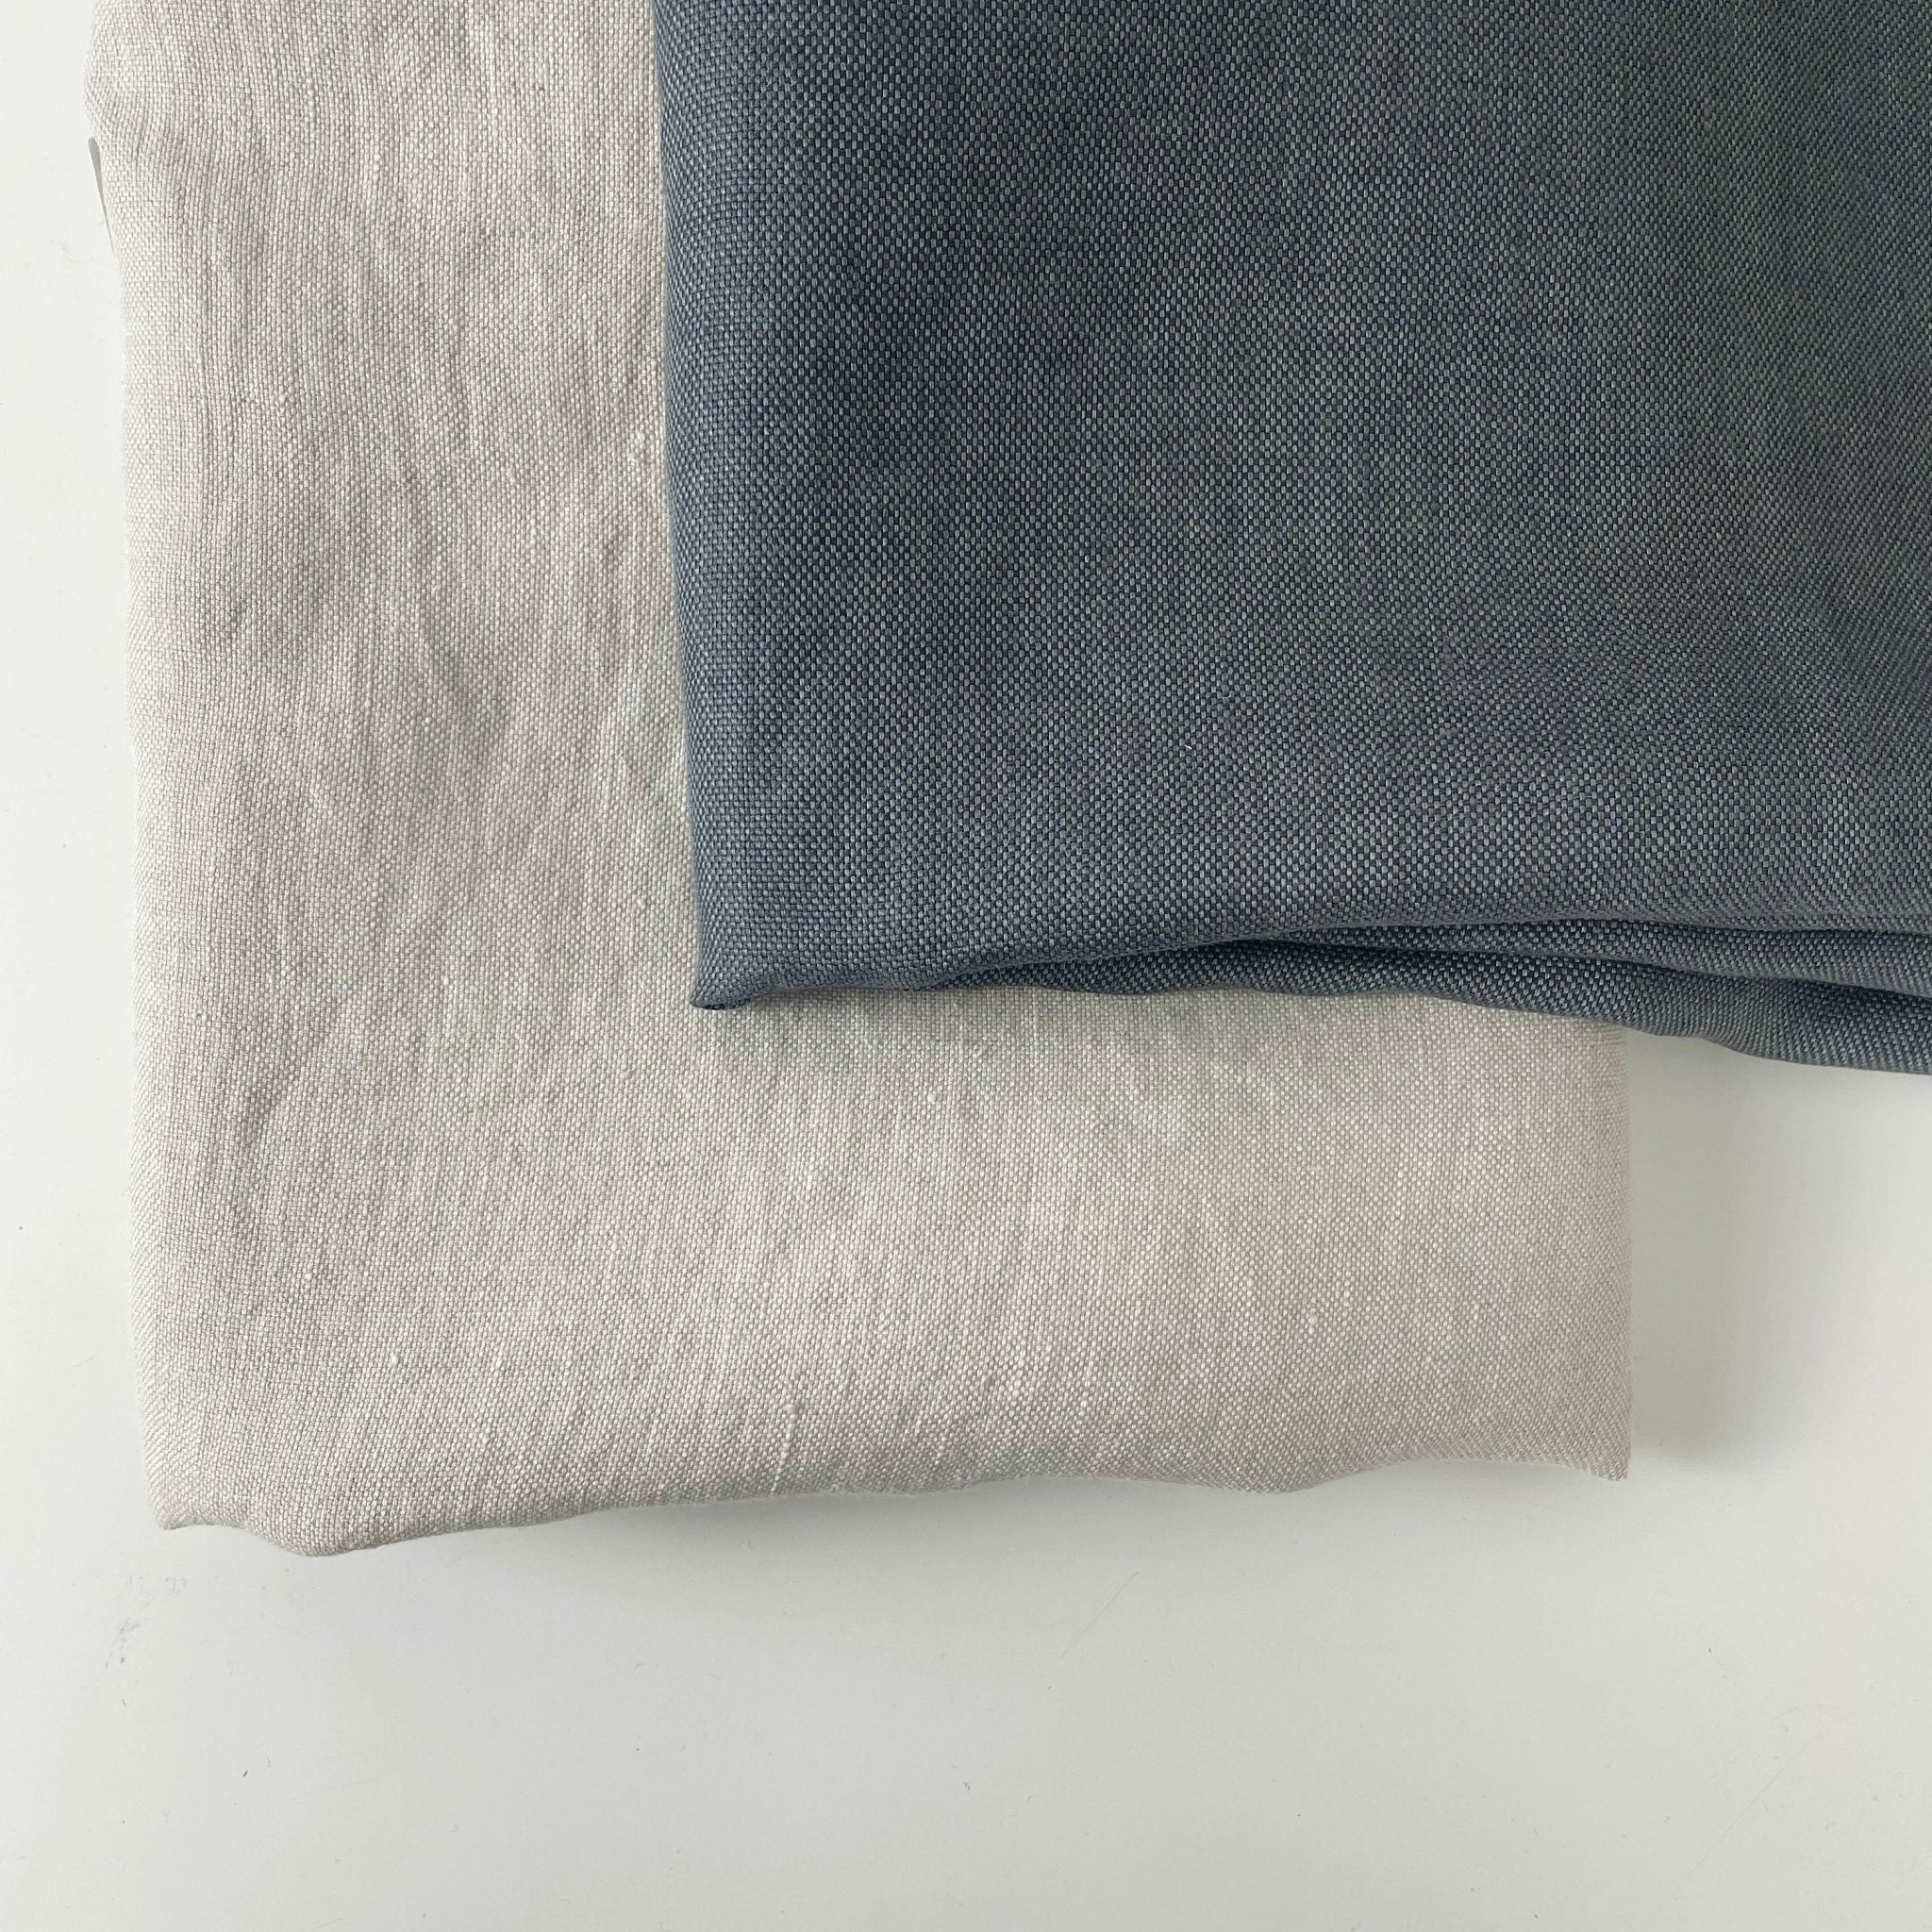 Linen Natural Grey Dot Fabric 7288 7438 - The Linen Lab - Natural